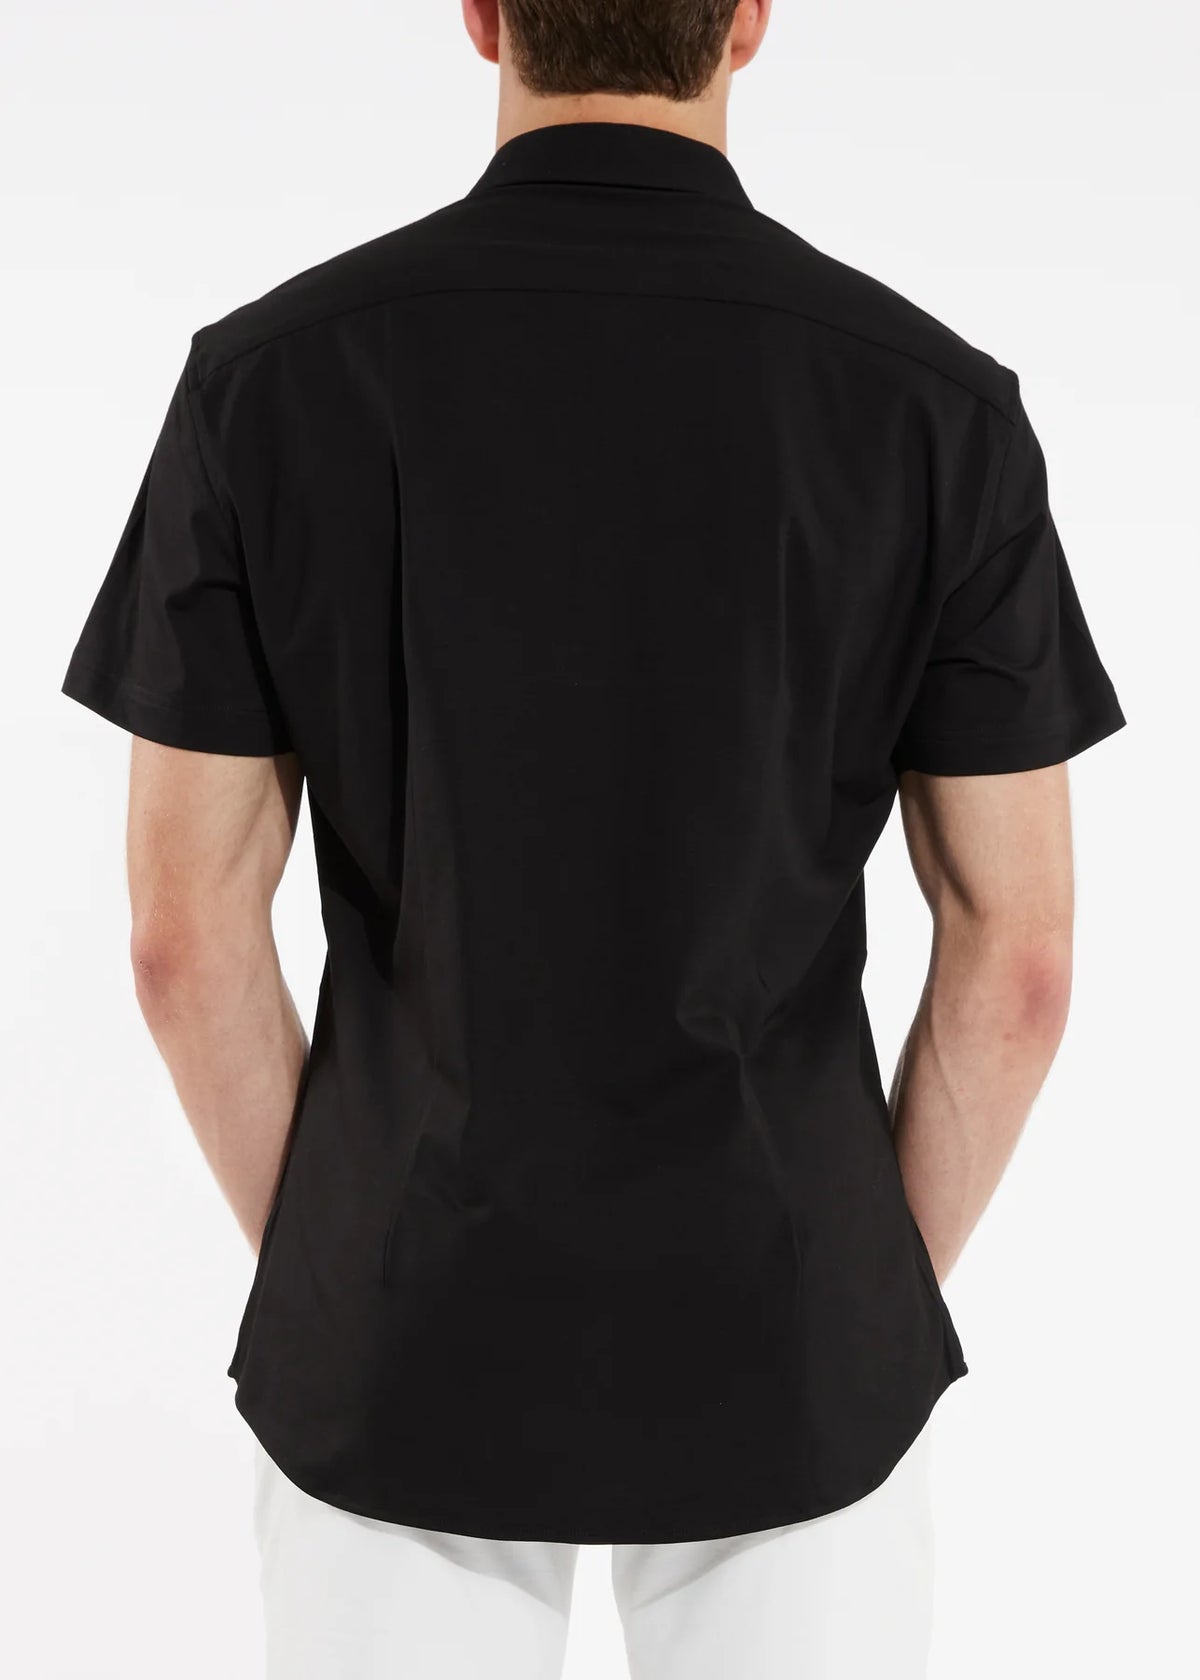 Stretch Jersey Knit Short Sleeved Shirt (Black w/Tape Detail)